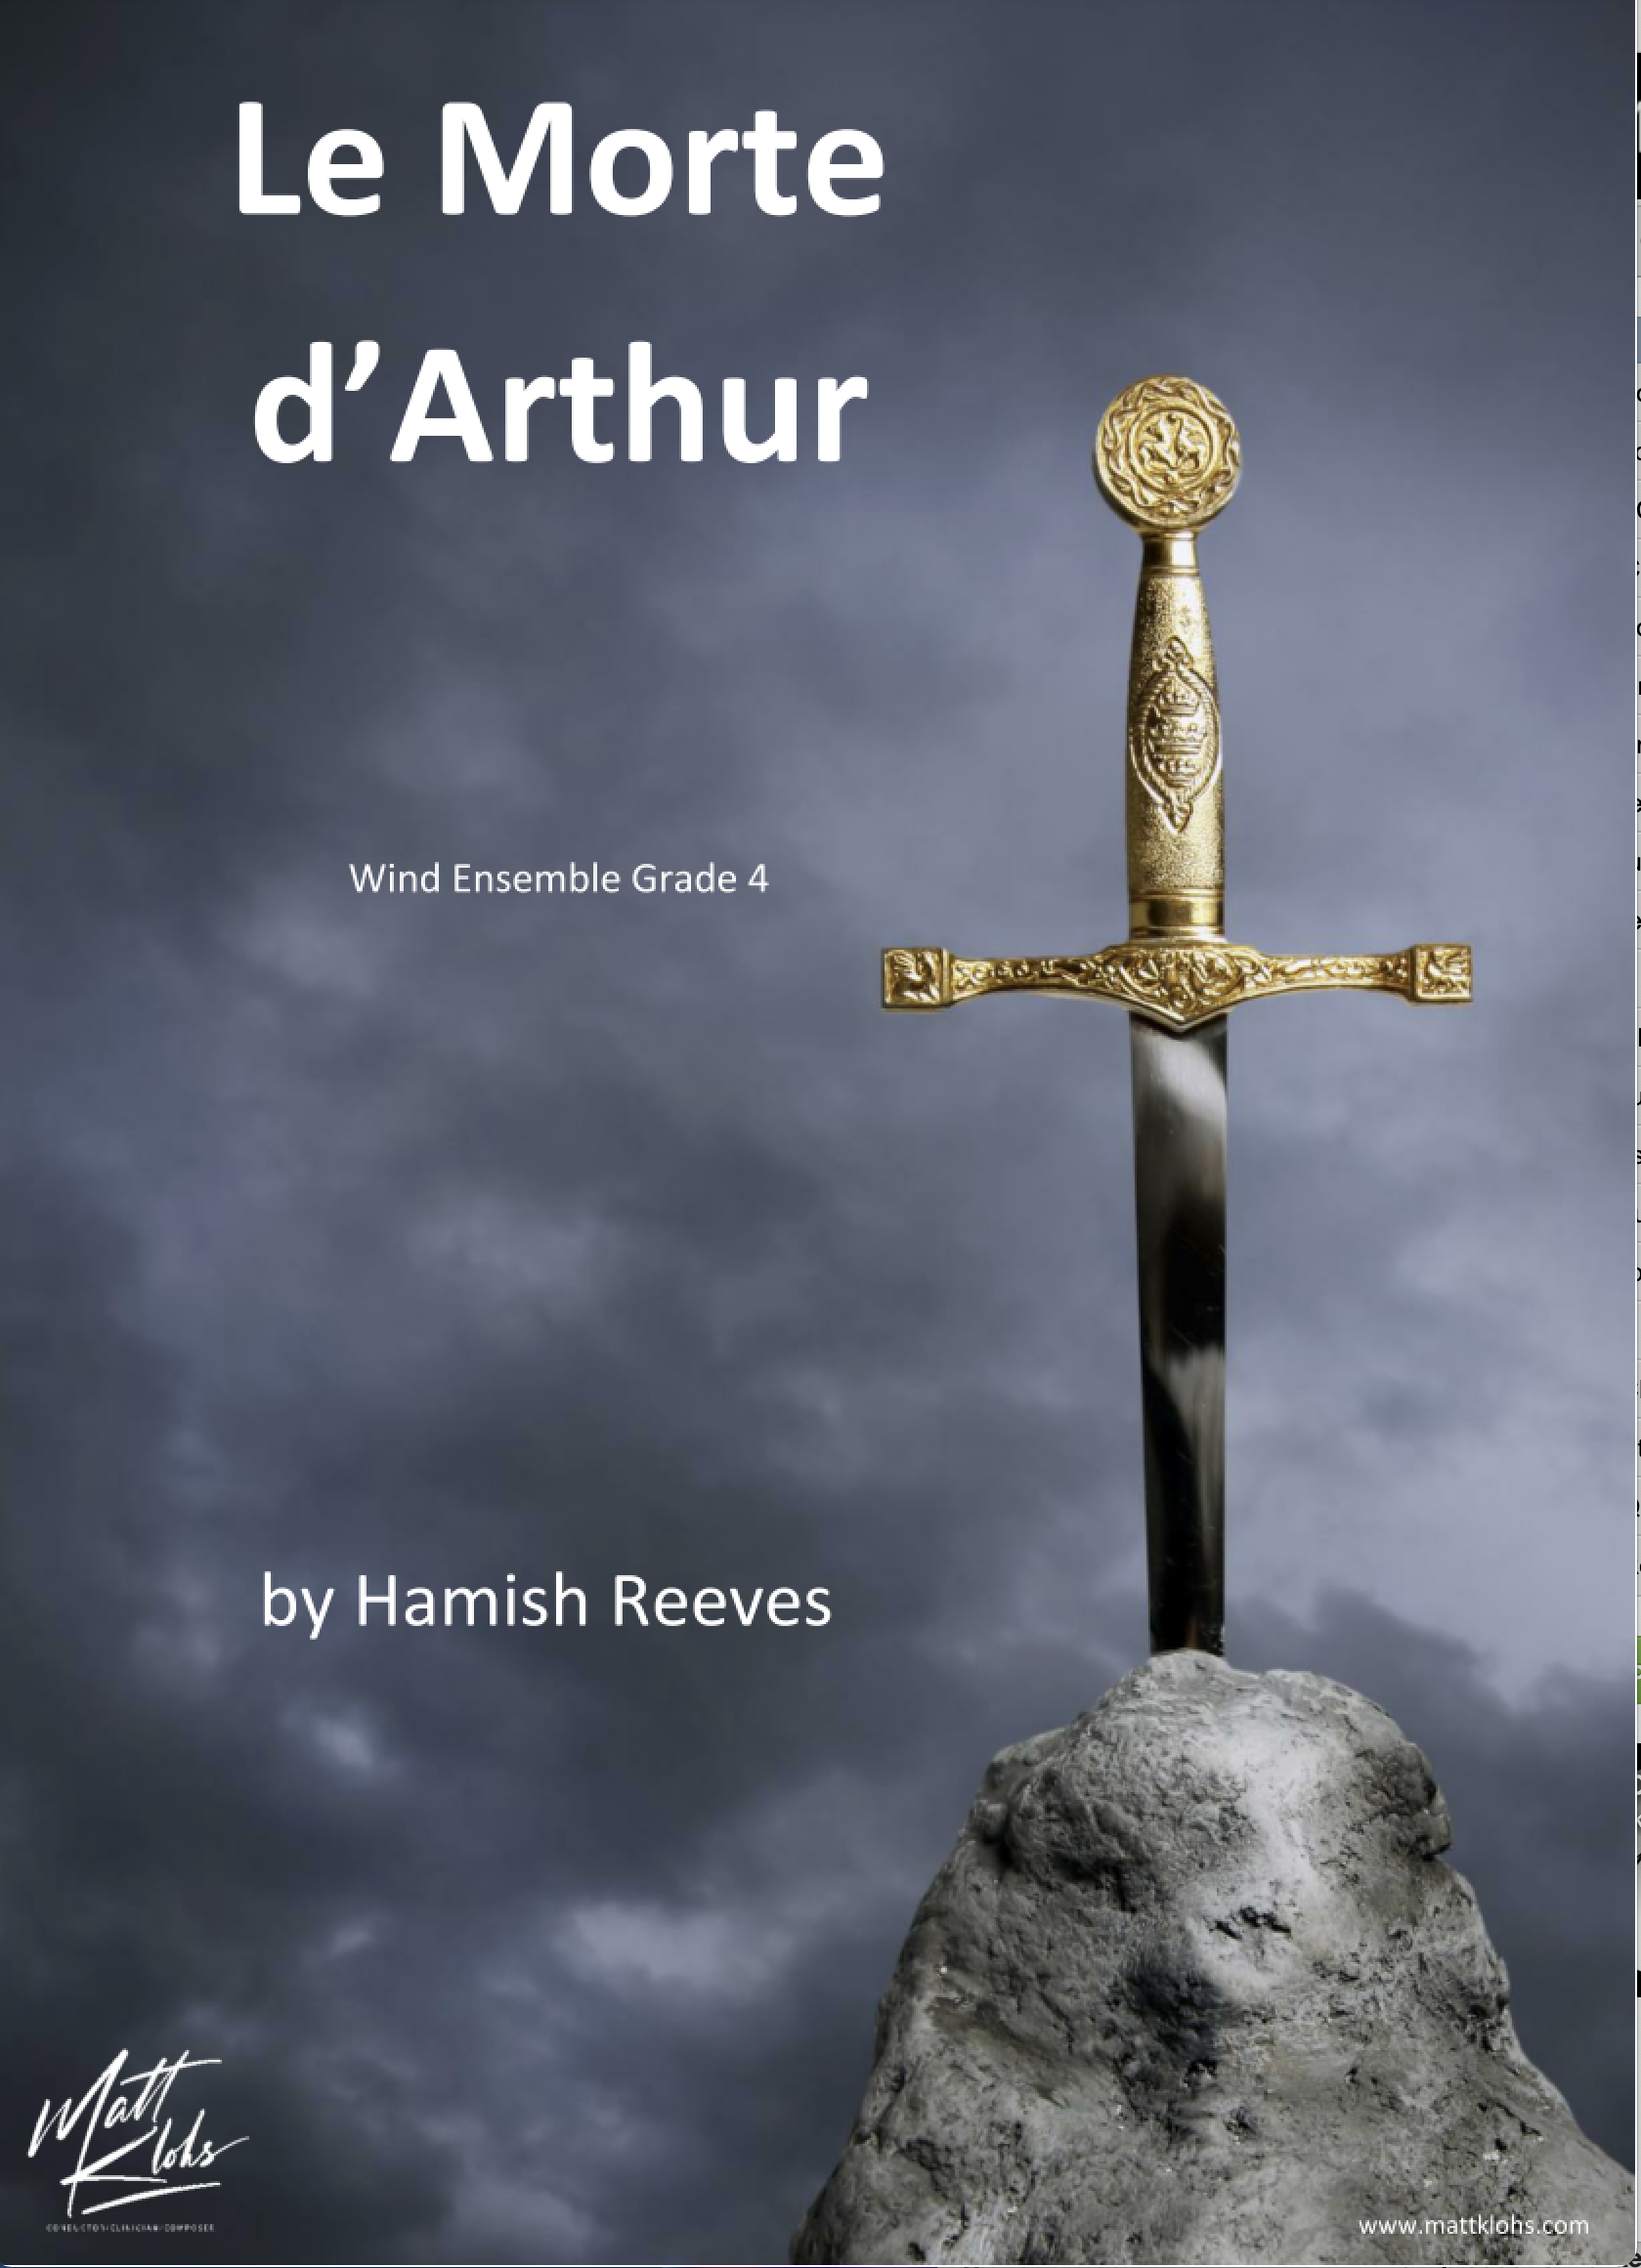 Le Morte D'Arthur by Hamish Reeves